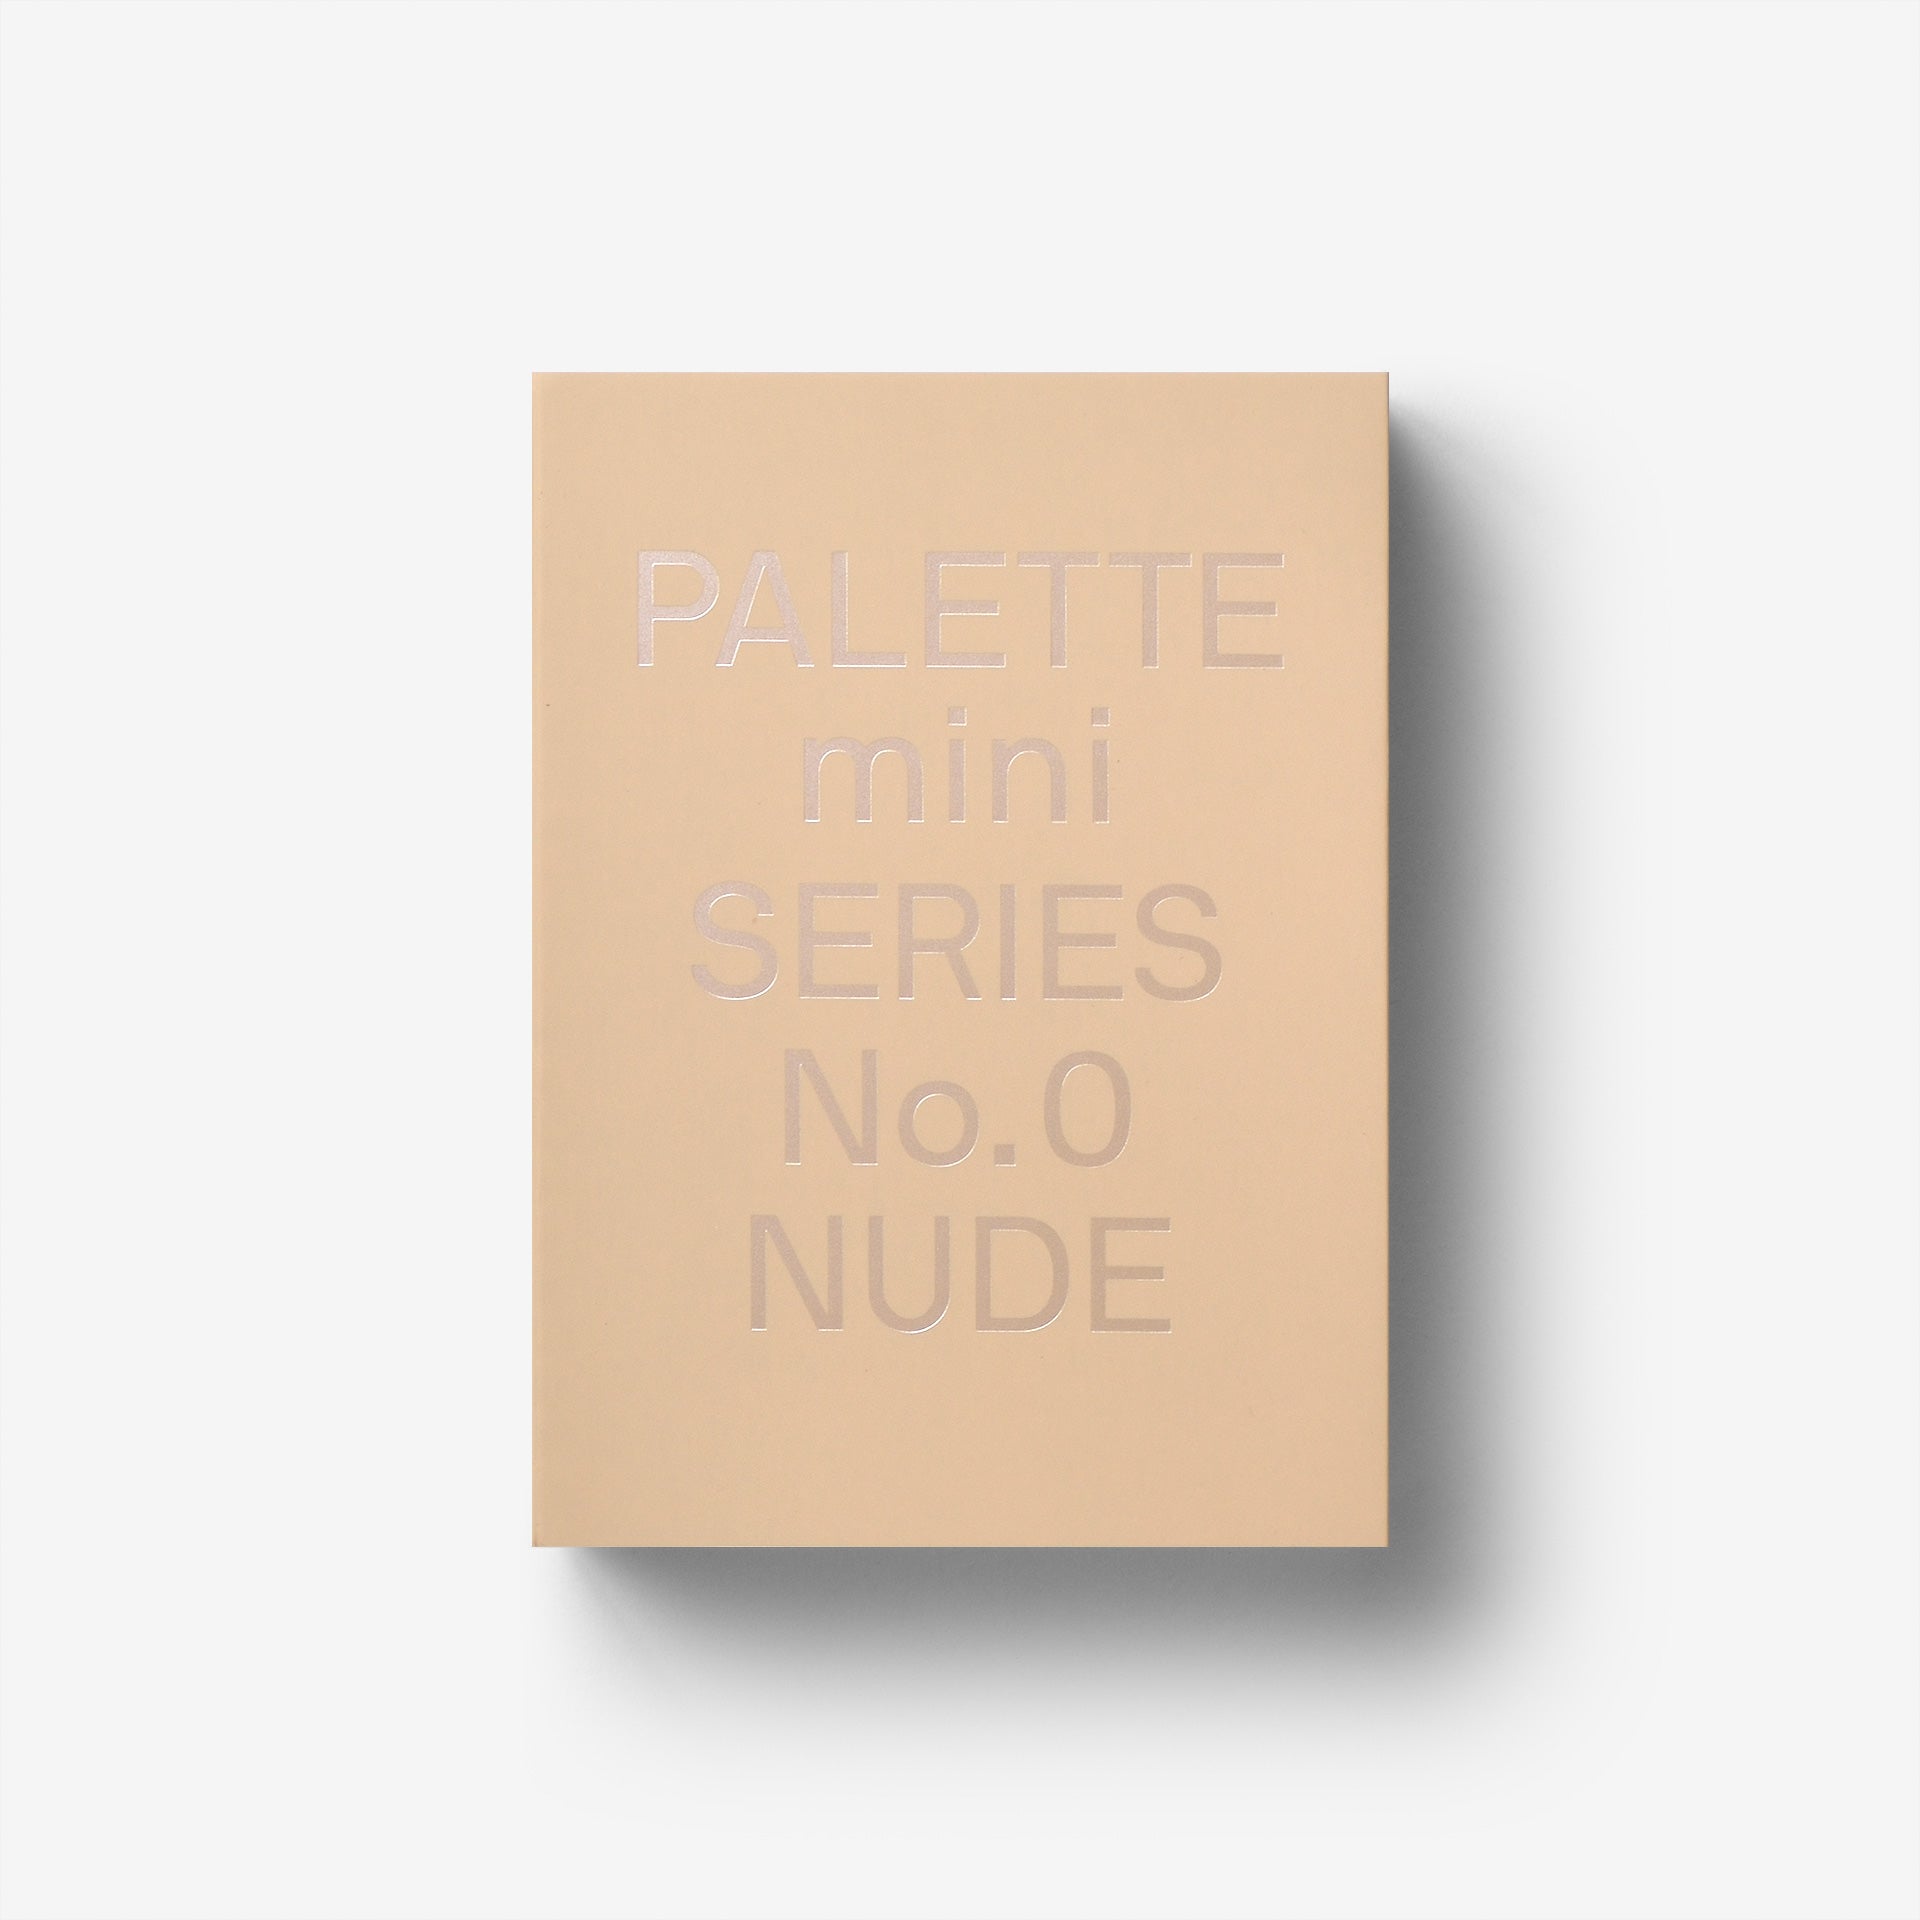 PALETTE mini 00: Nude